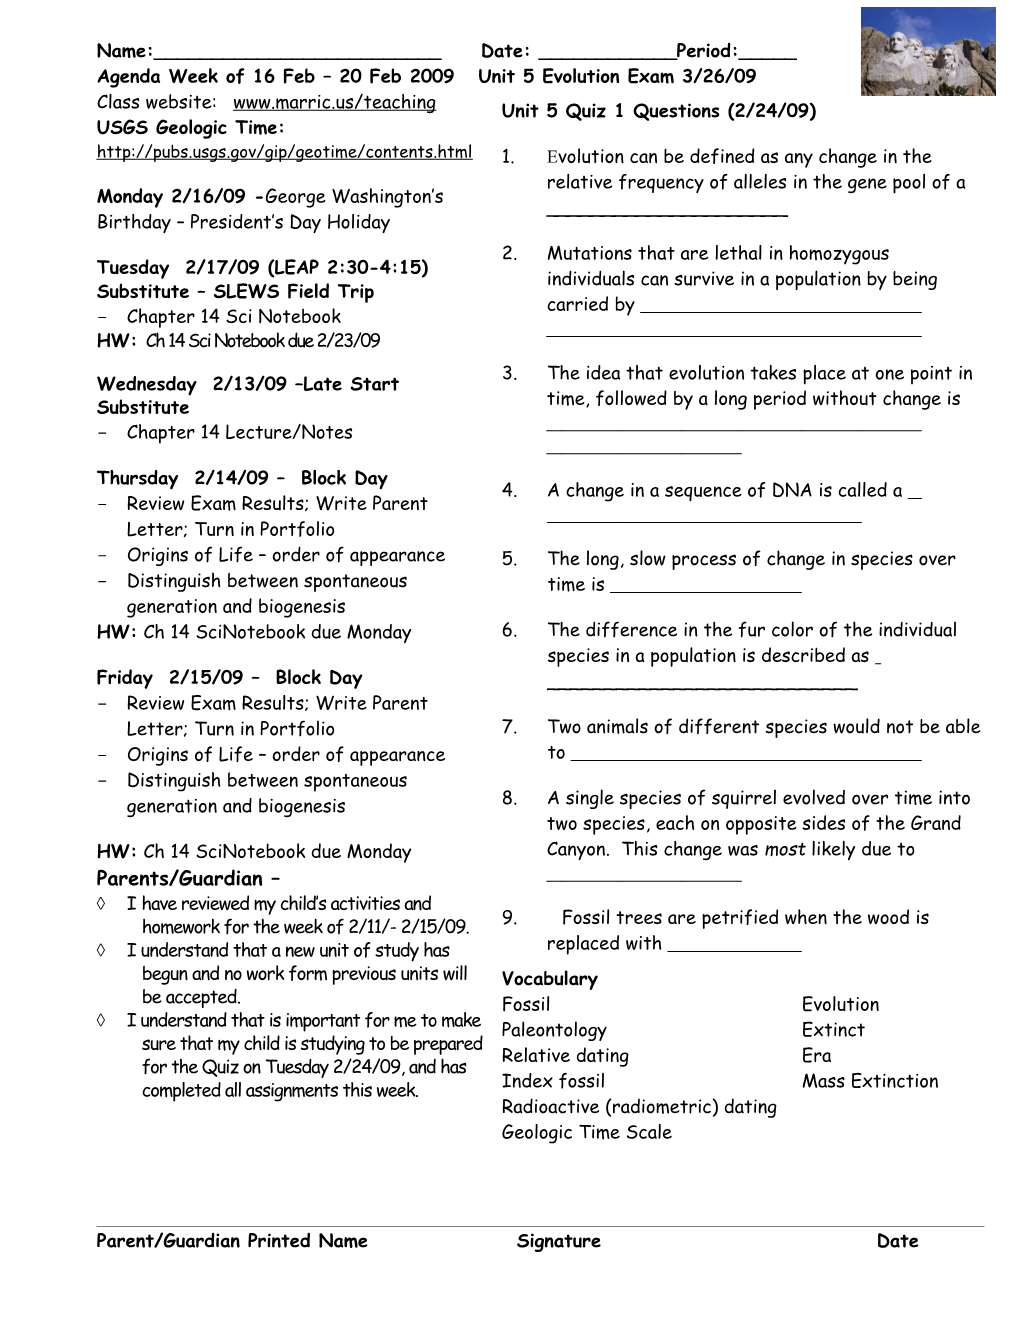 Agenda Week of 16Feb 20 Feb2009 Unit 5Evolution Exam 3/26/09